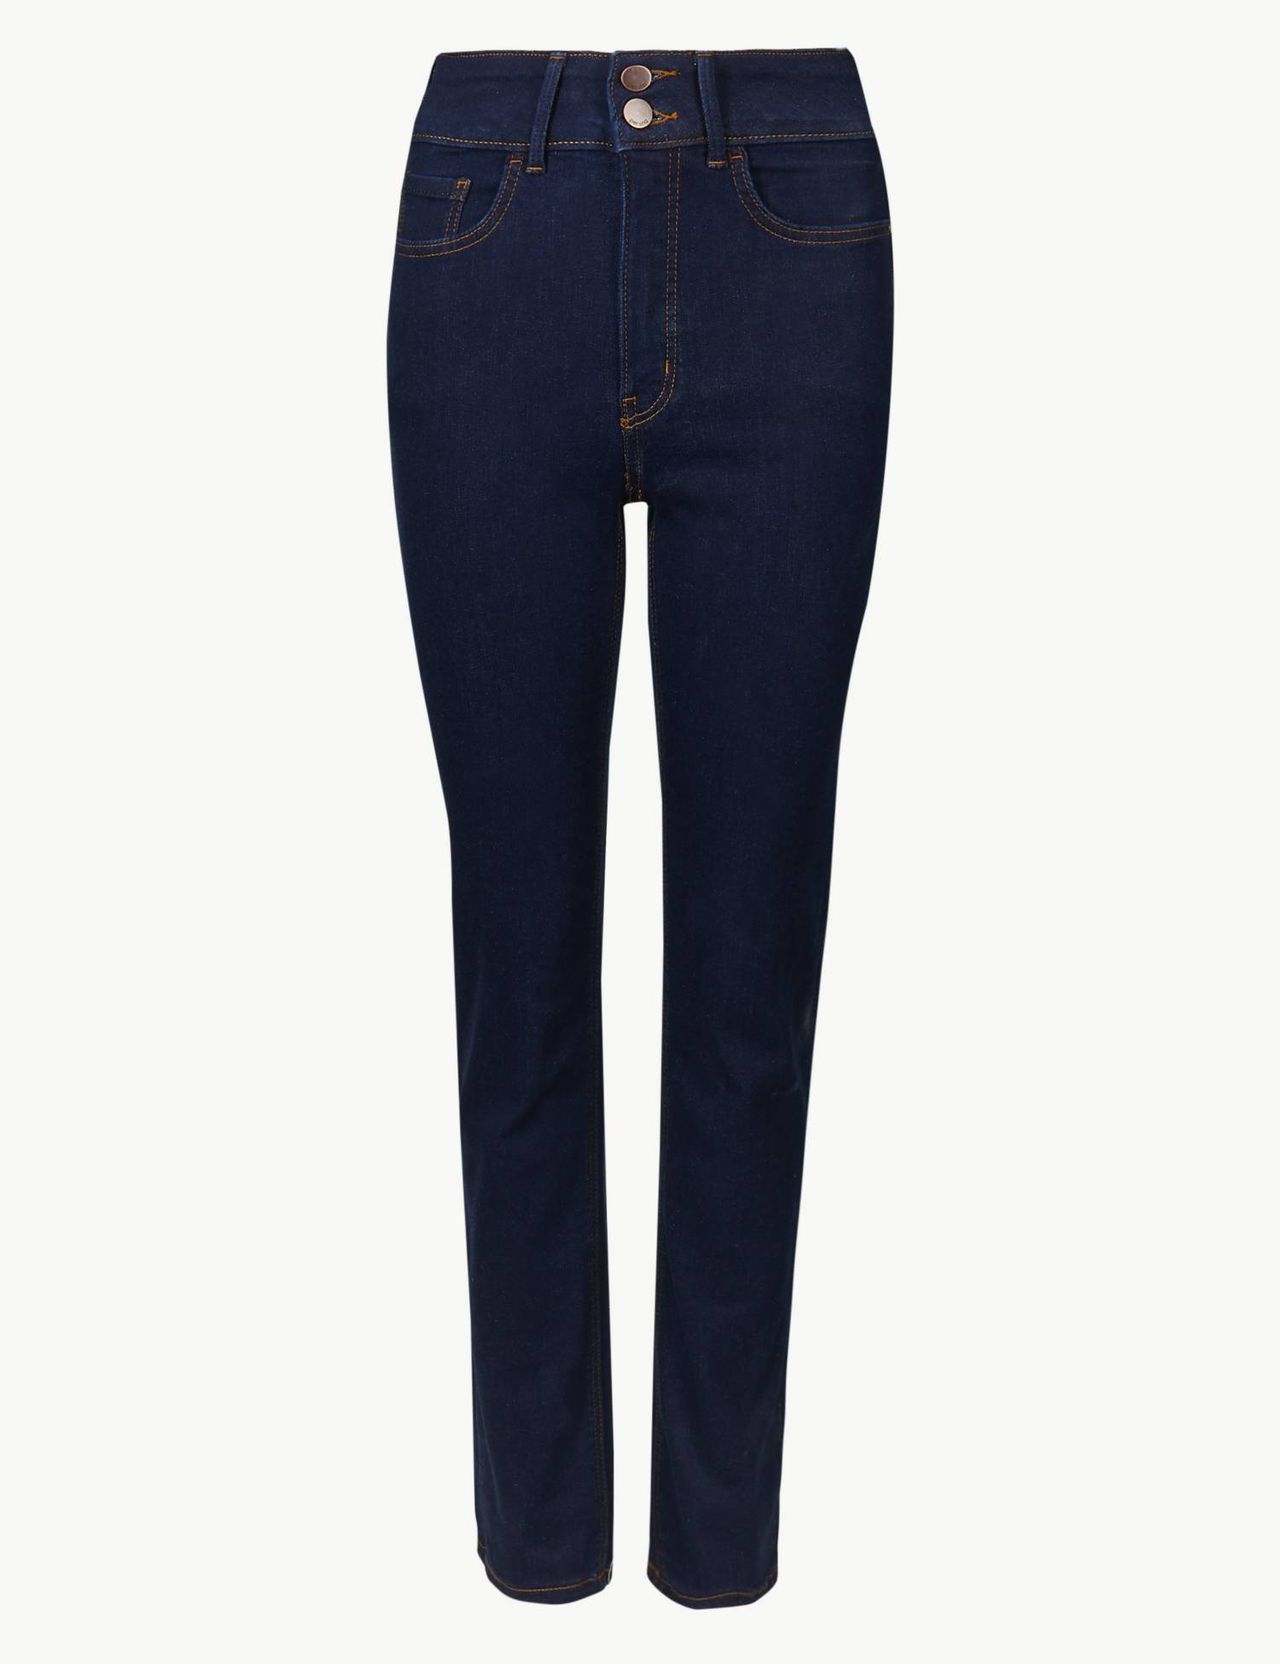 Marks & Spencer jeans: M&S announce new line of 'figure-flattering ...